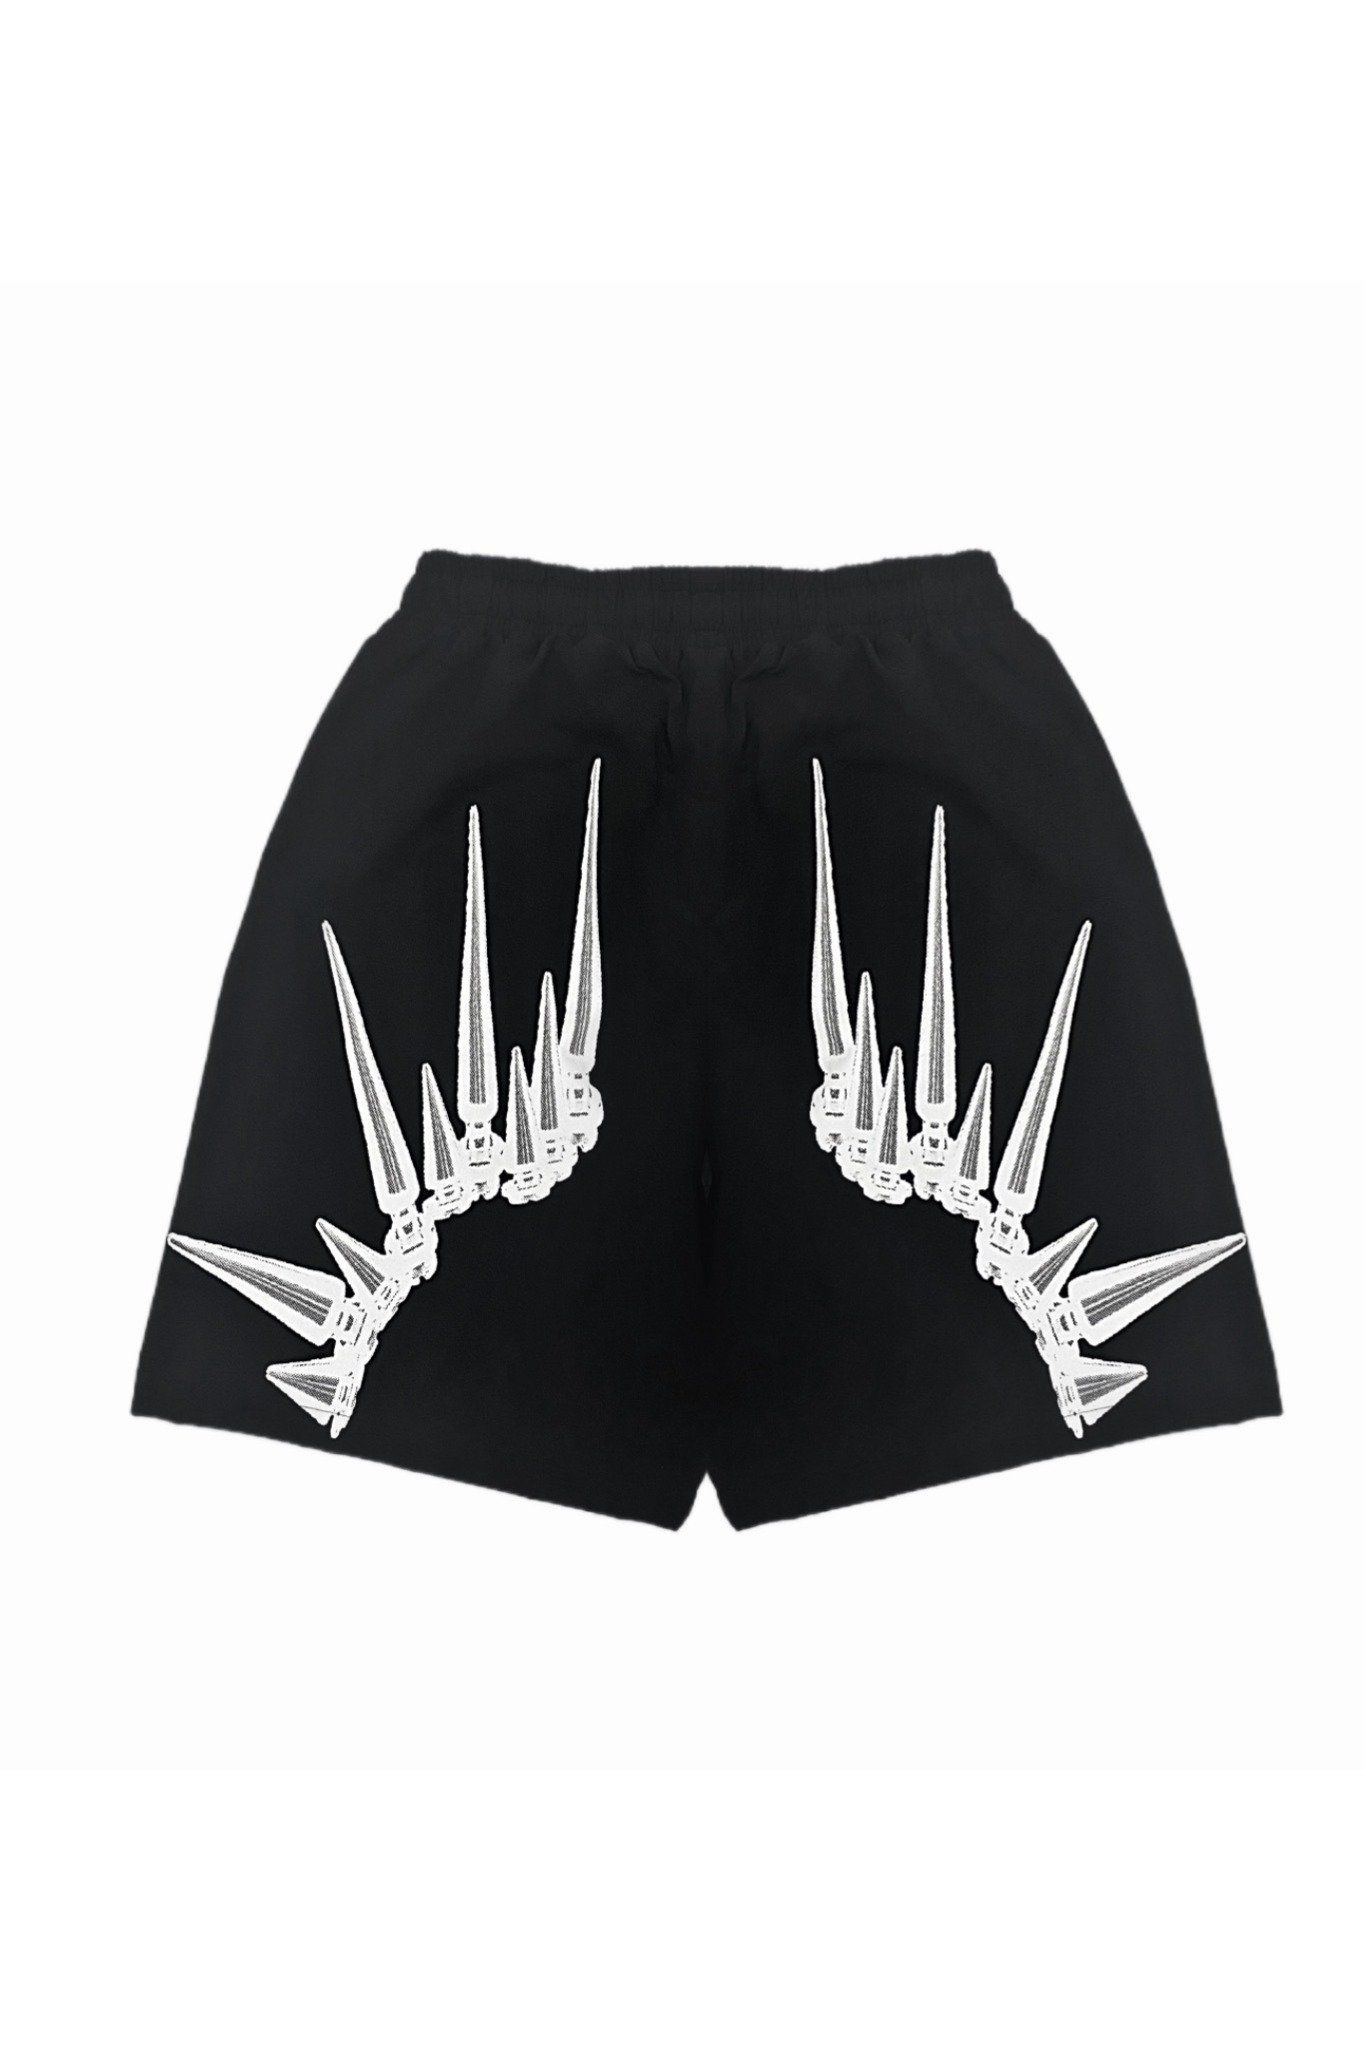  Apride Spiky Shorts 